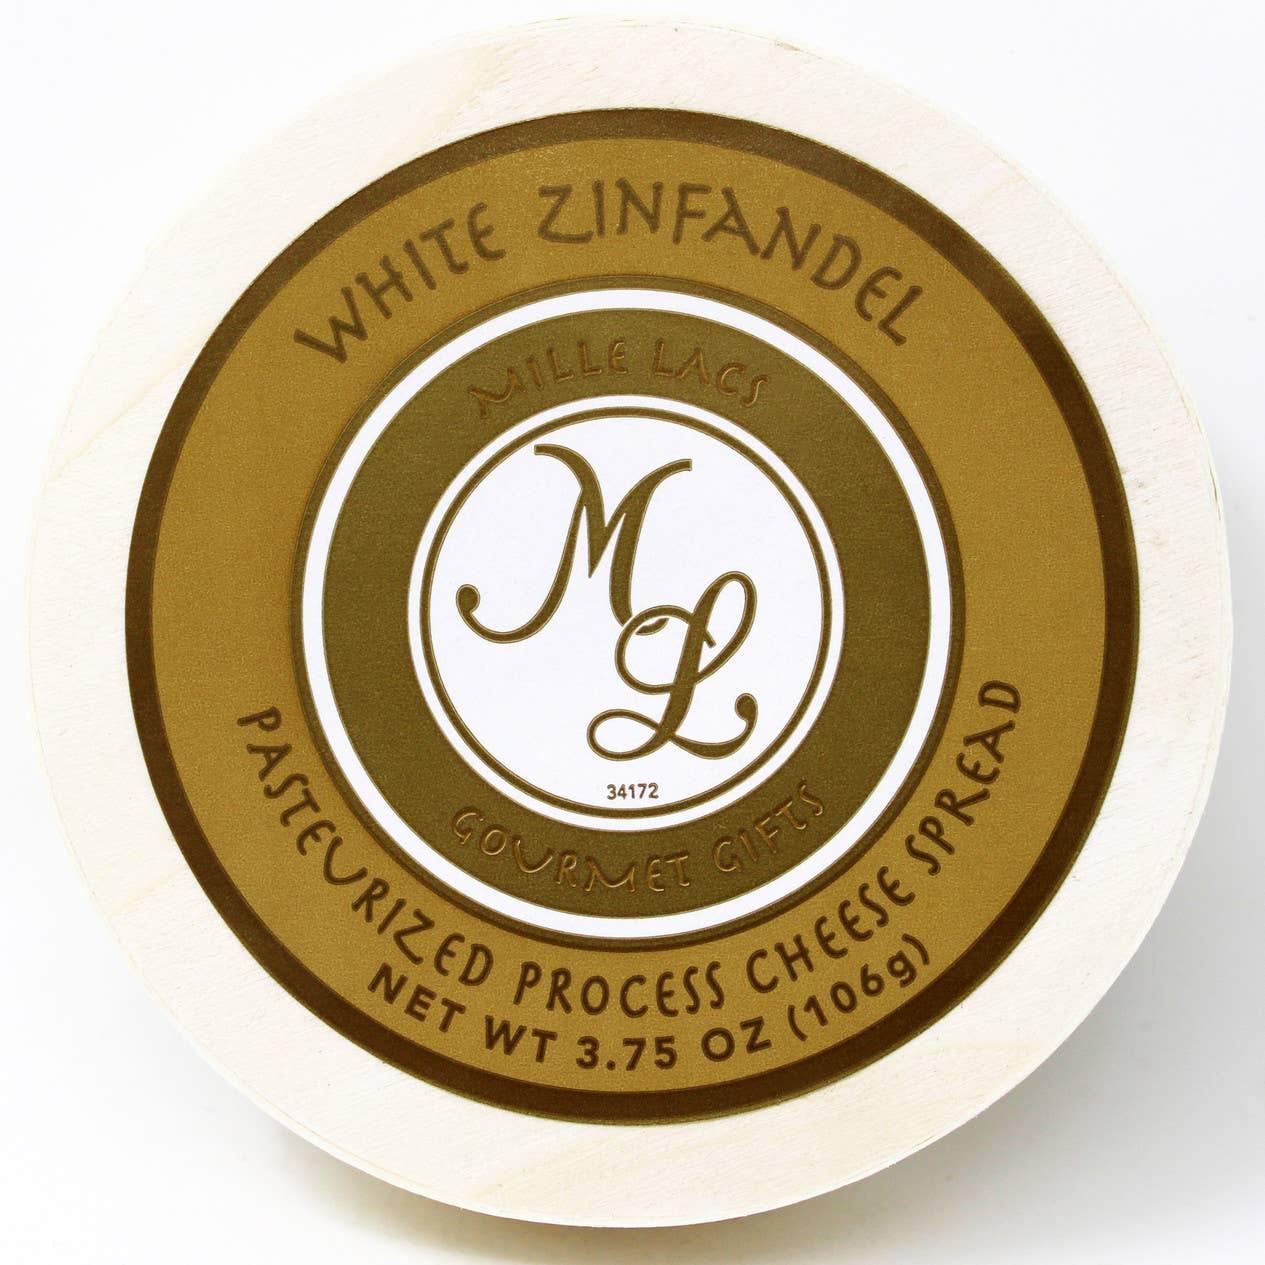 White Zinfandel Wine Cheese Spread